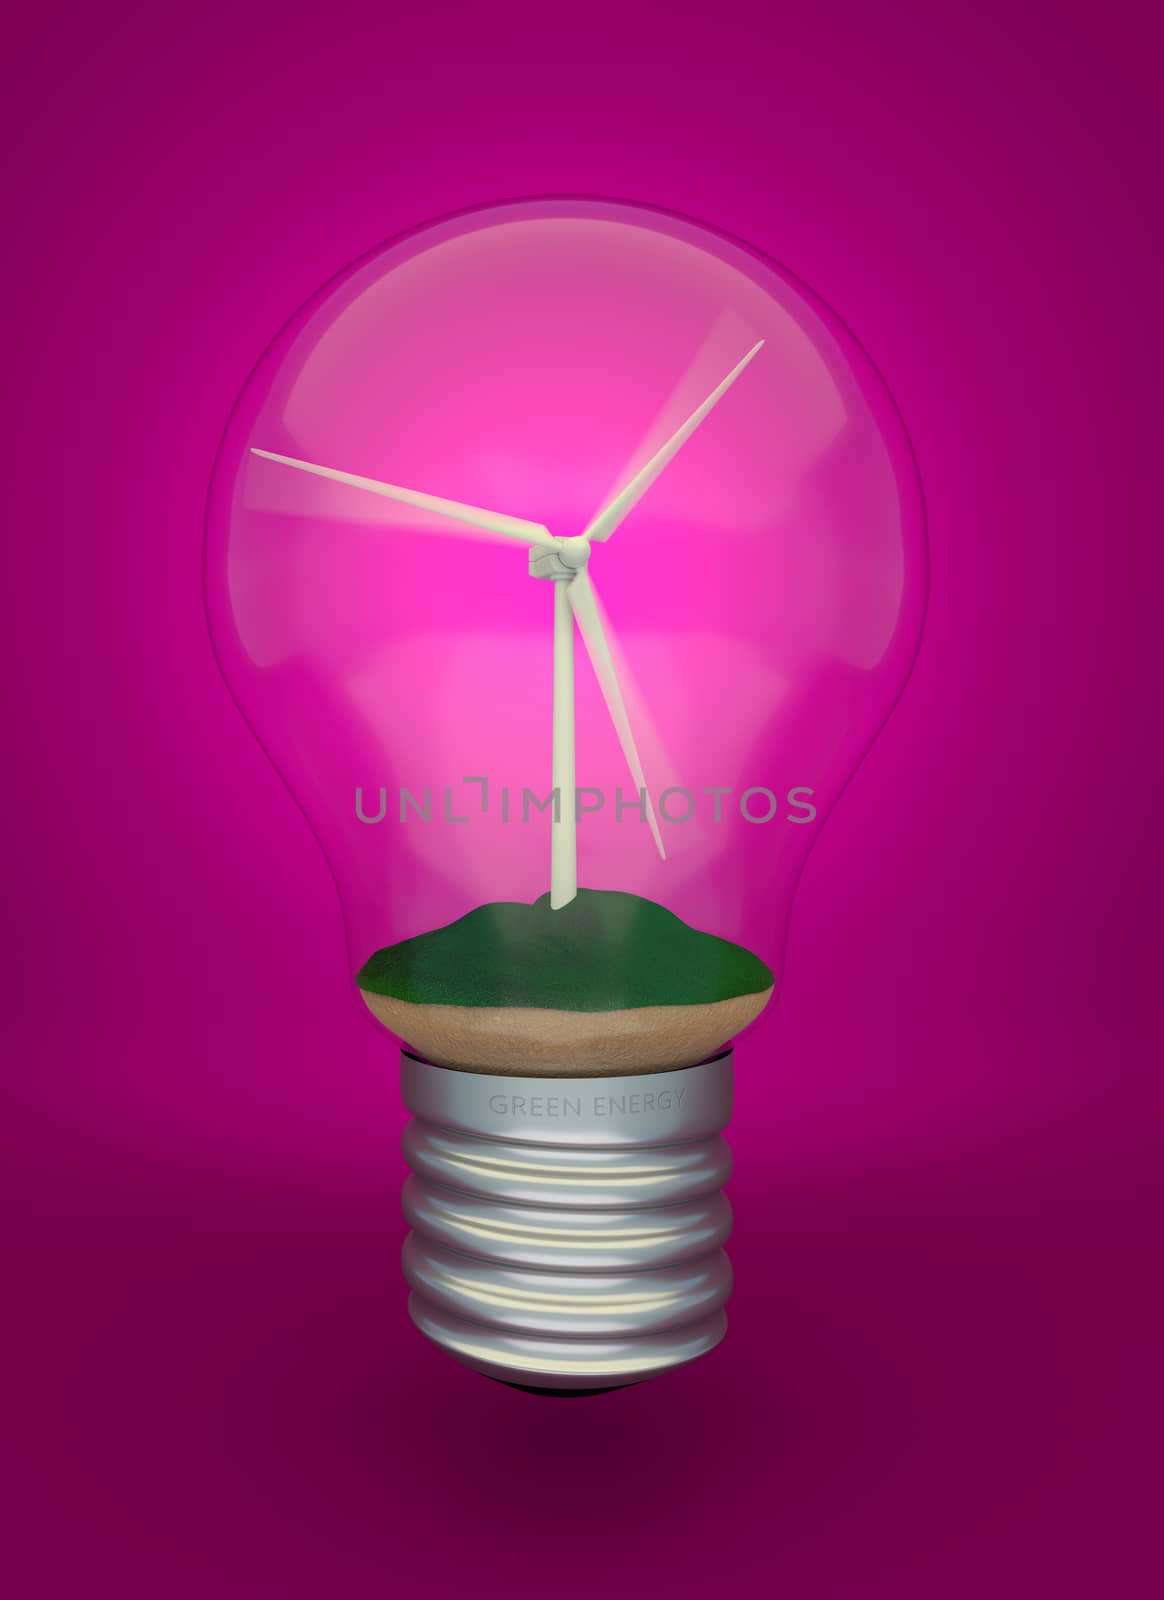 Wind Turbine in light bulb by Barbraford